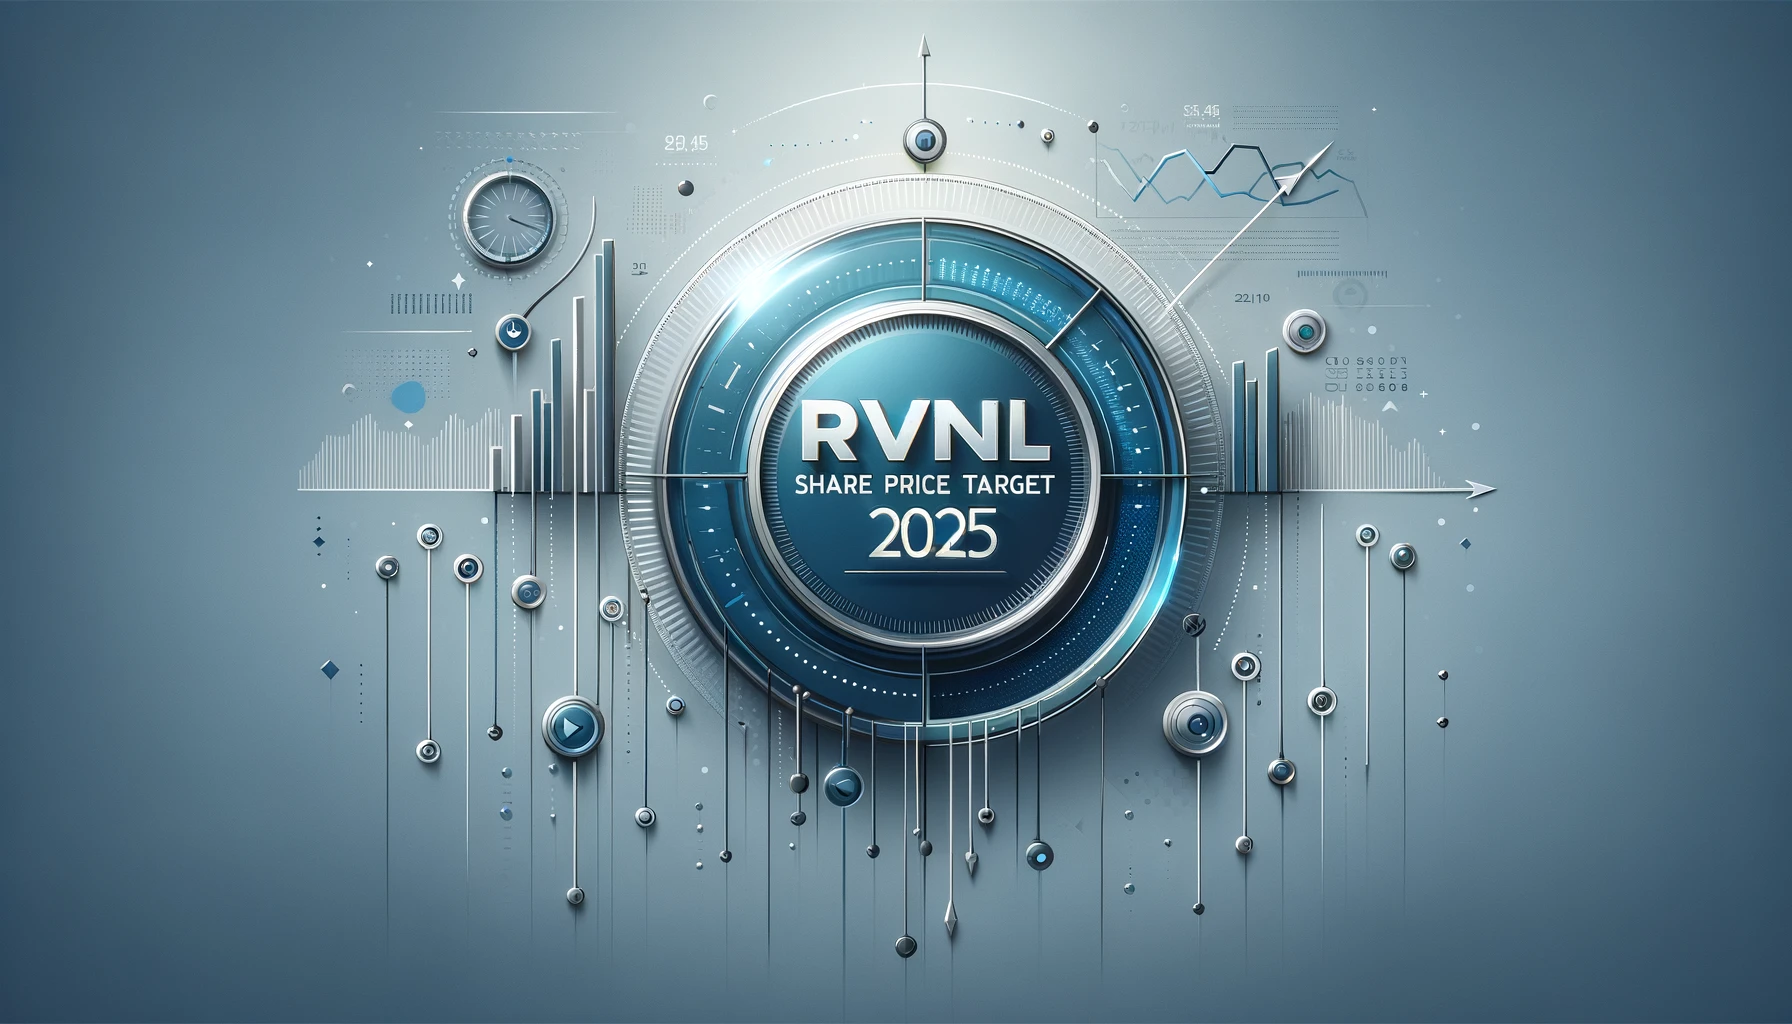 Rvnl Share Price Target 2025